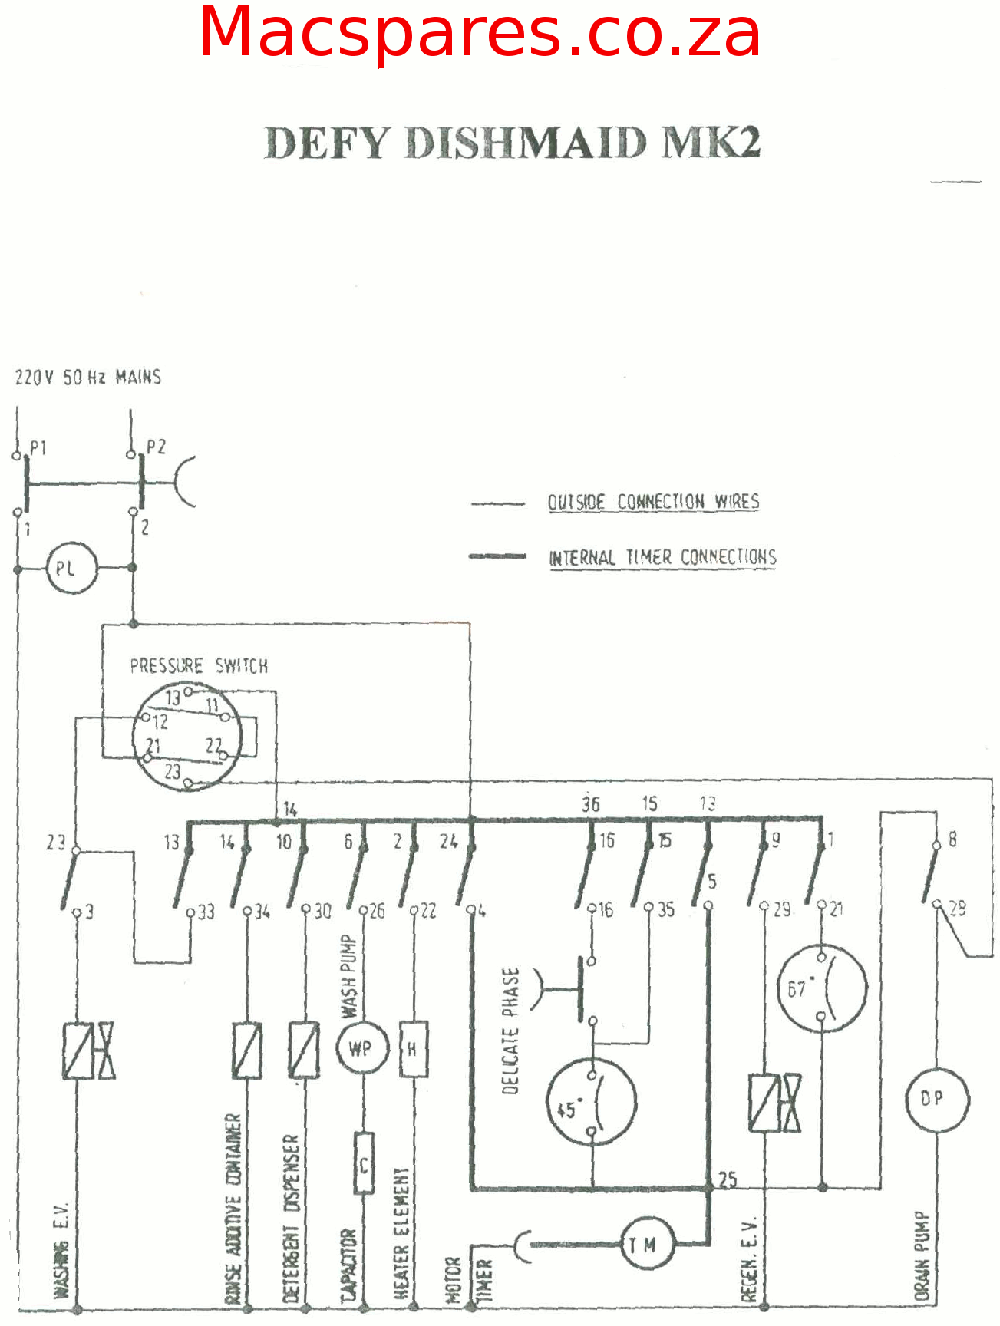 ... Dishwasher Wiring Diagram. on maytag centennial dryer wiring diagram